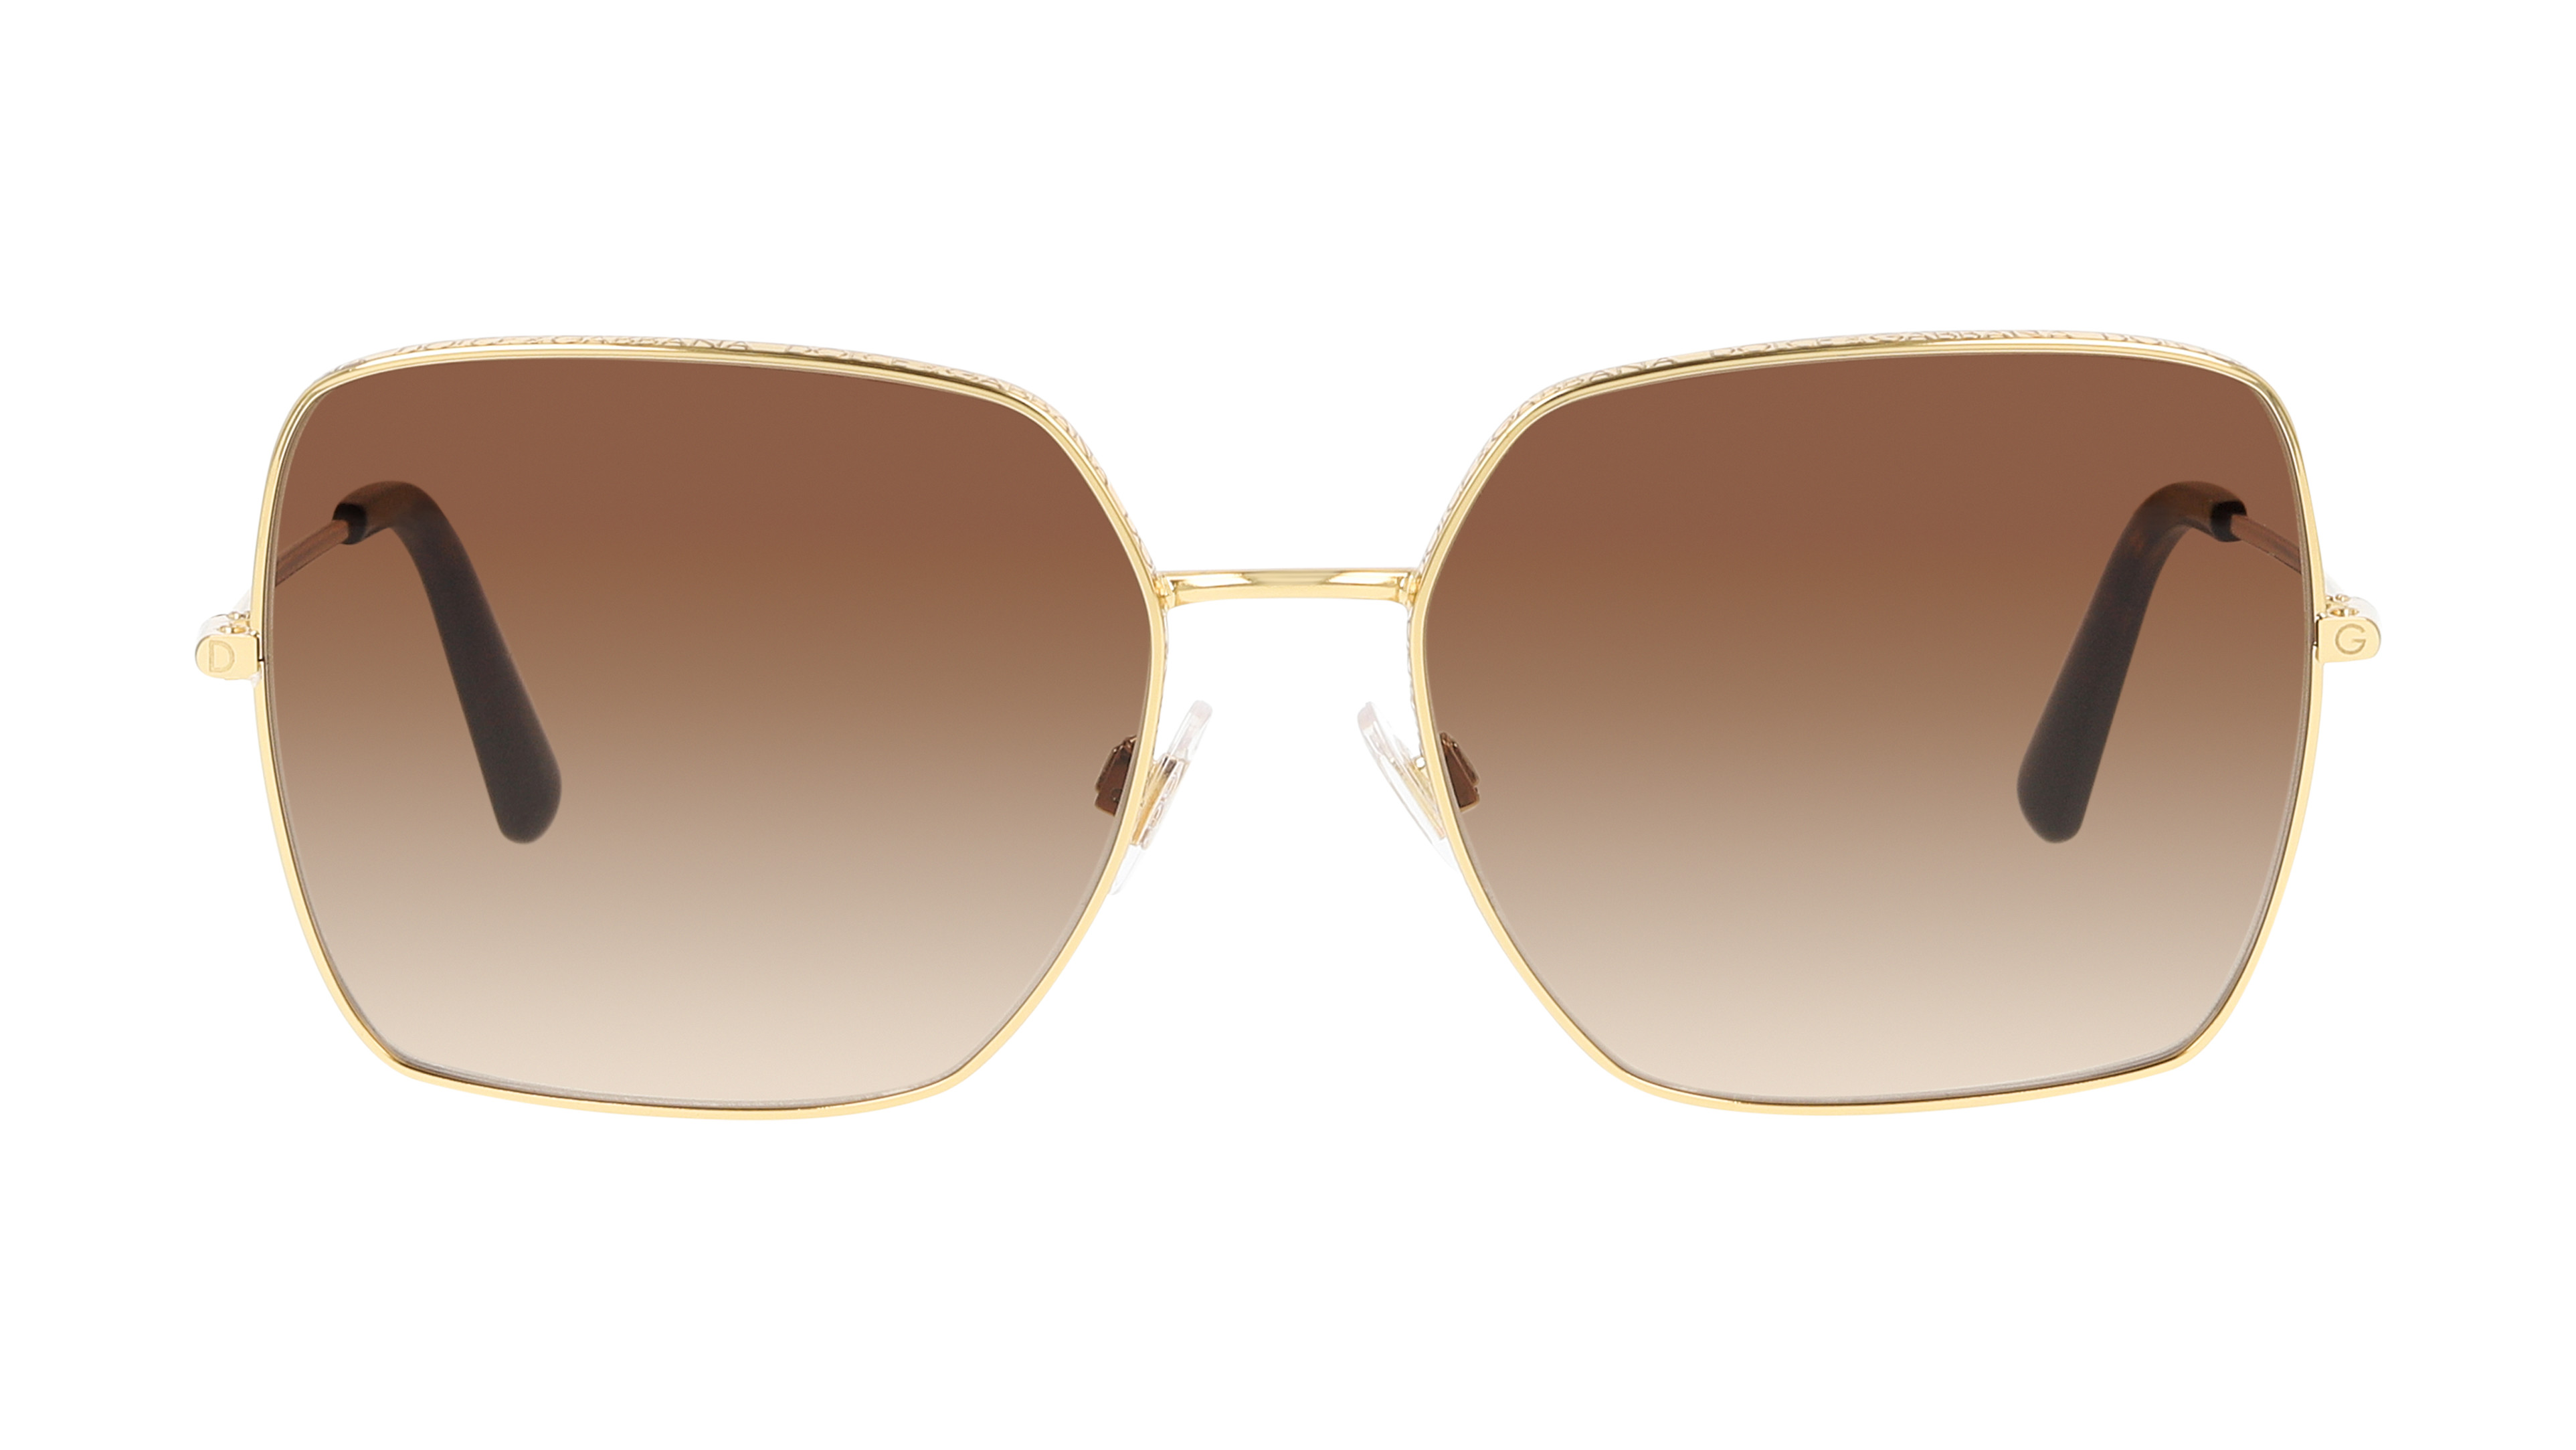 [products.image.front] Dolce&Gabbana 0DG2242 02/13 Sonnenbrille